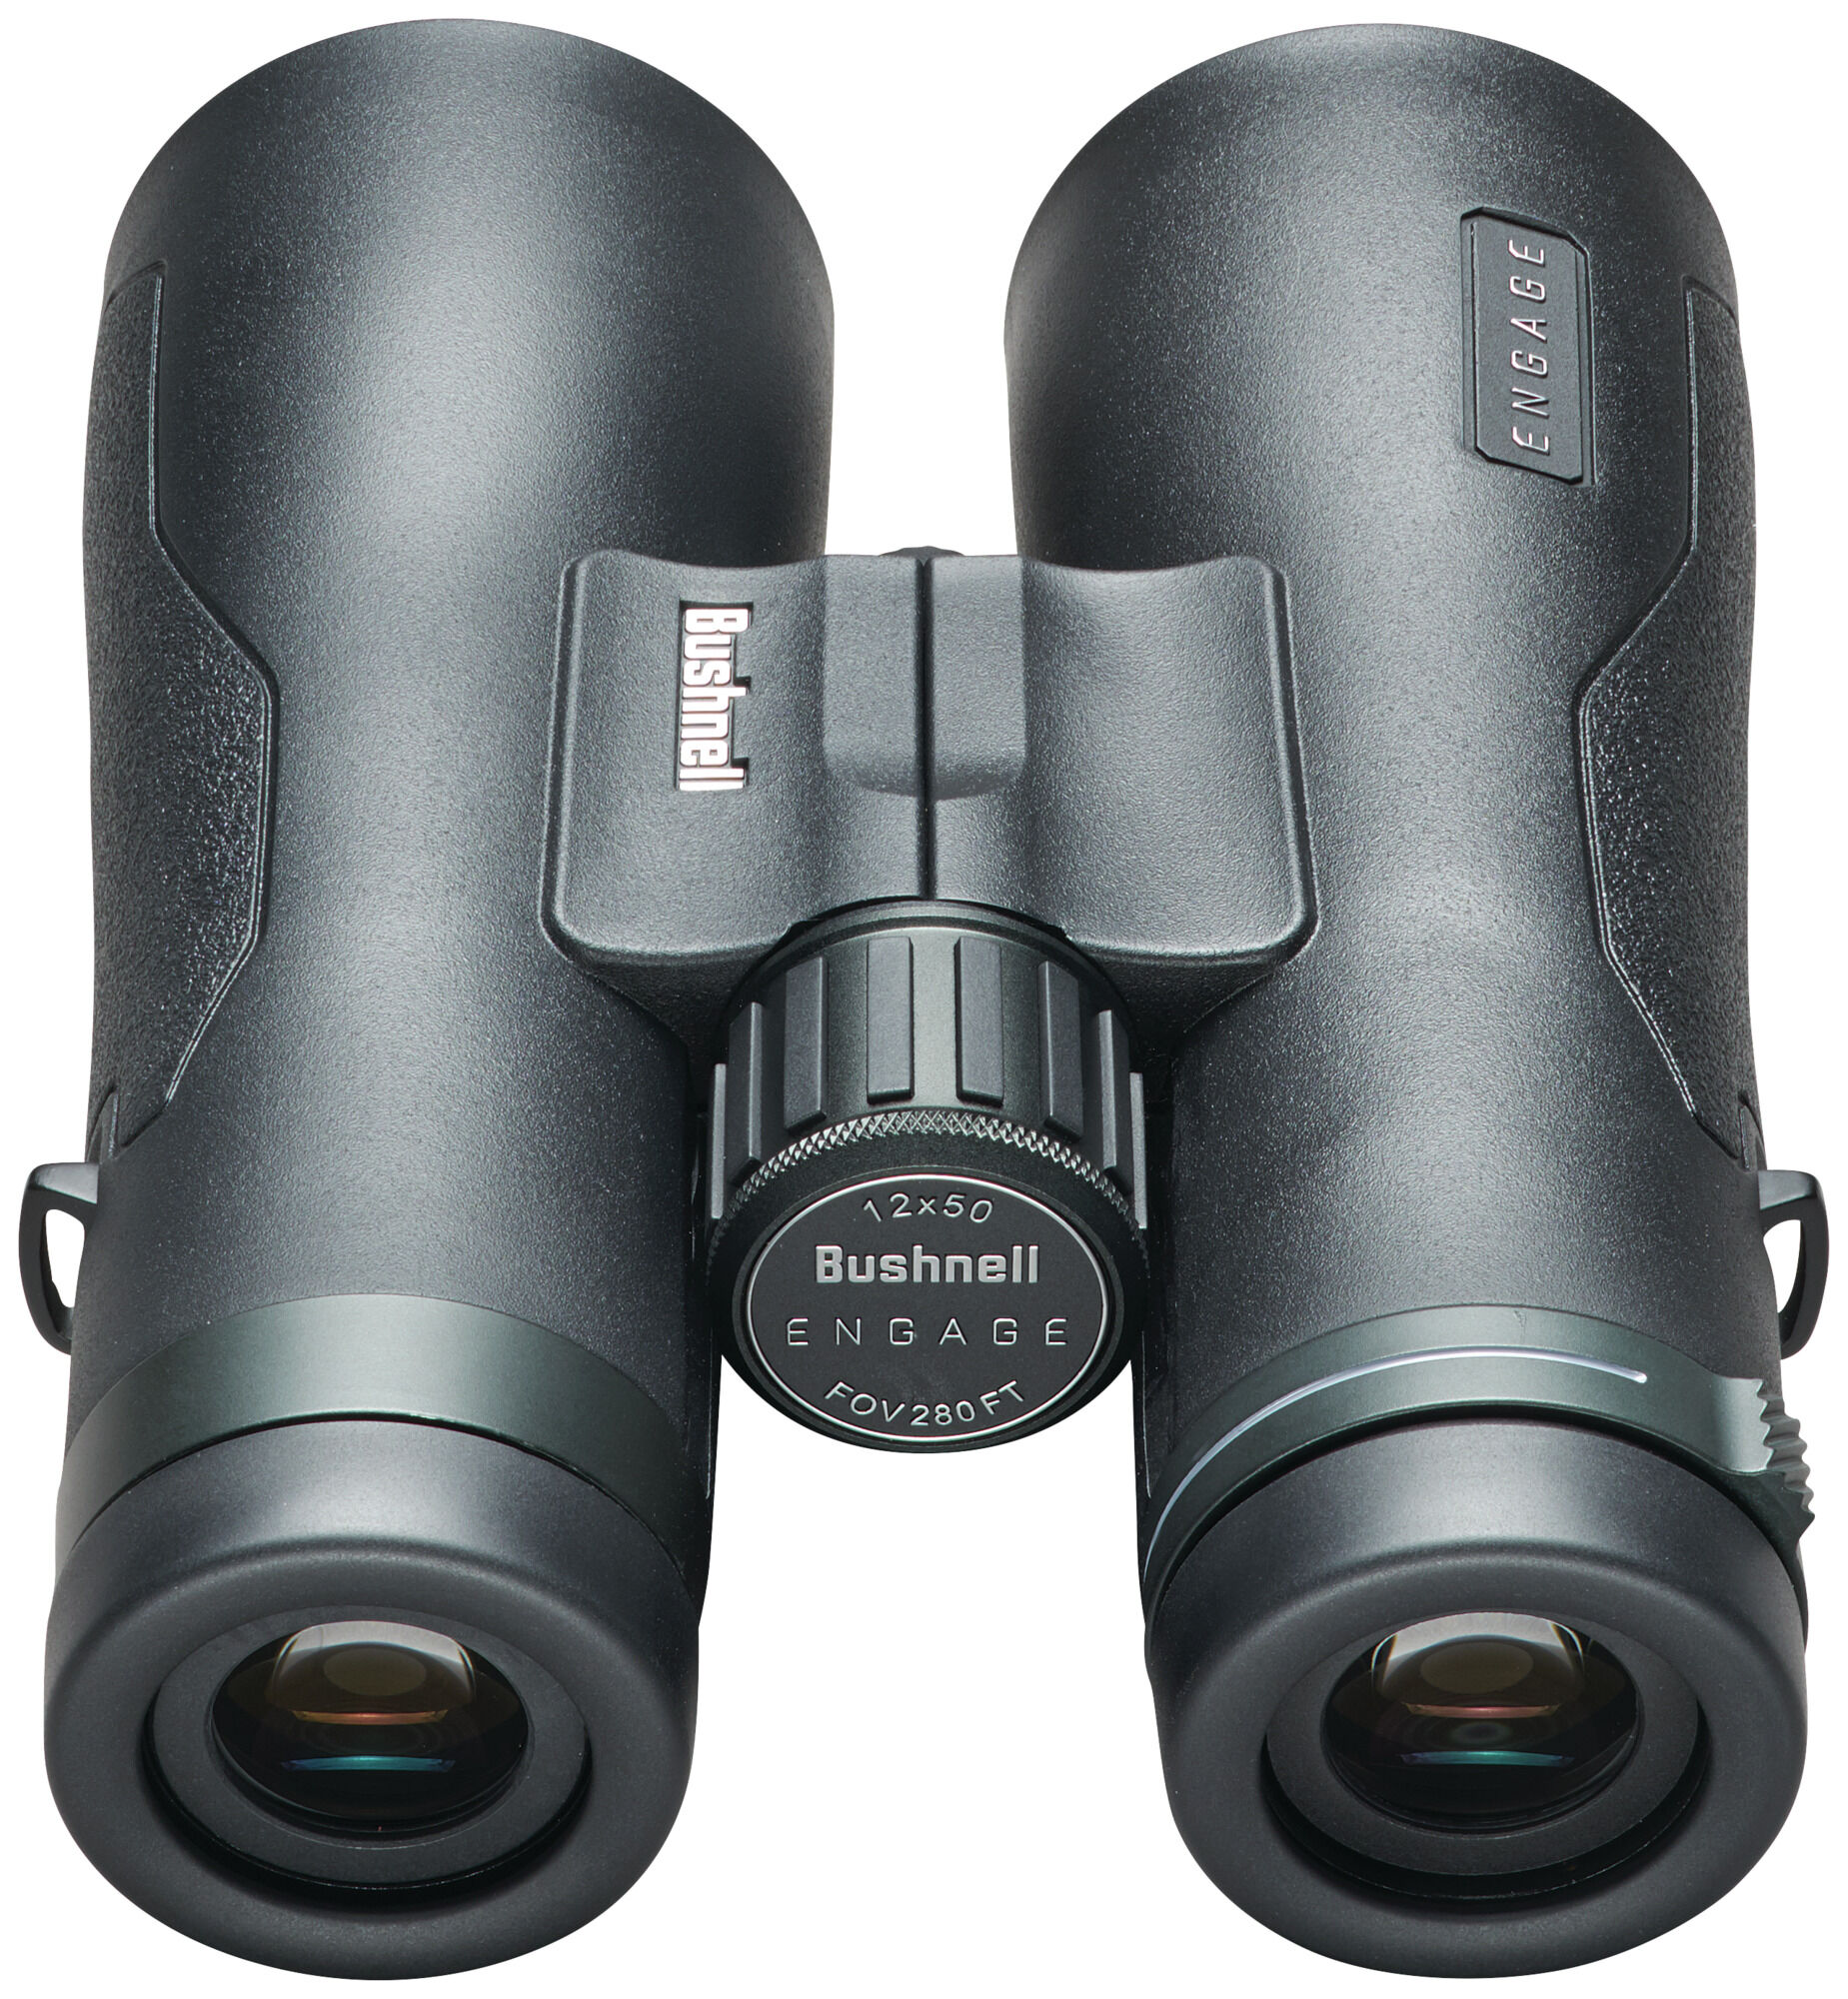 Engage EDX Hunting Binoculars, 12x50 Magnification | Bushnell